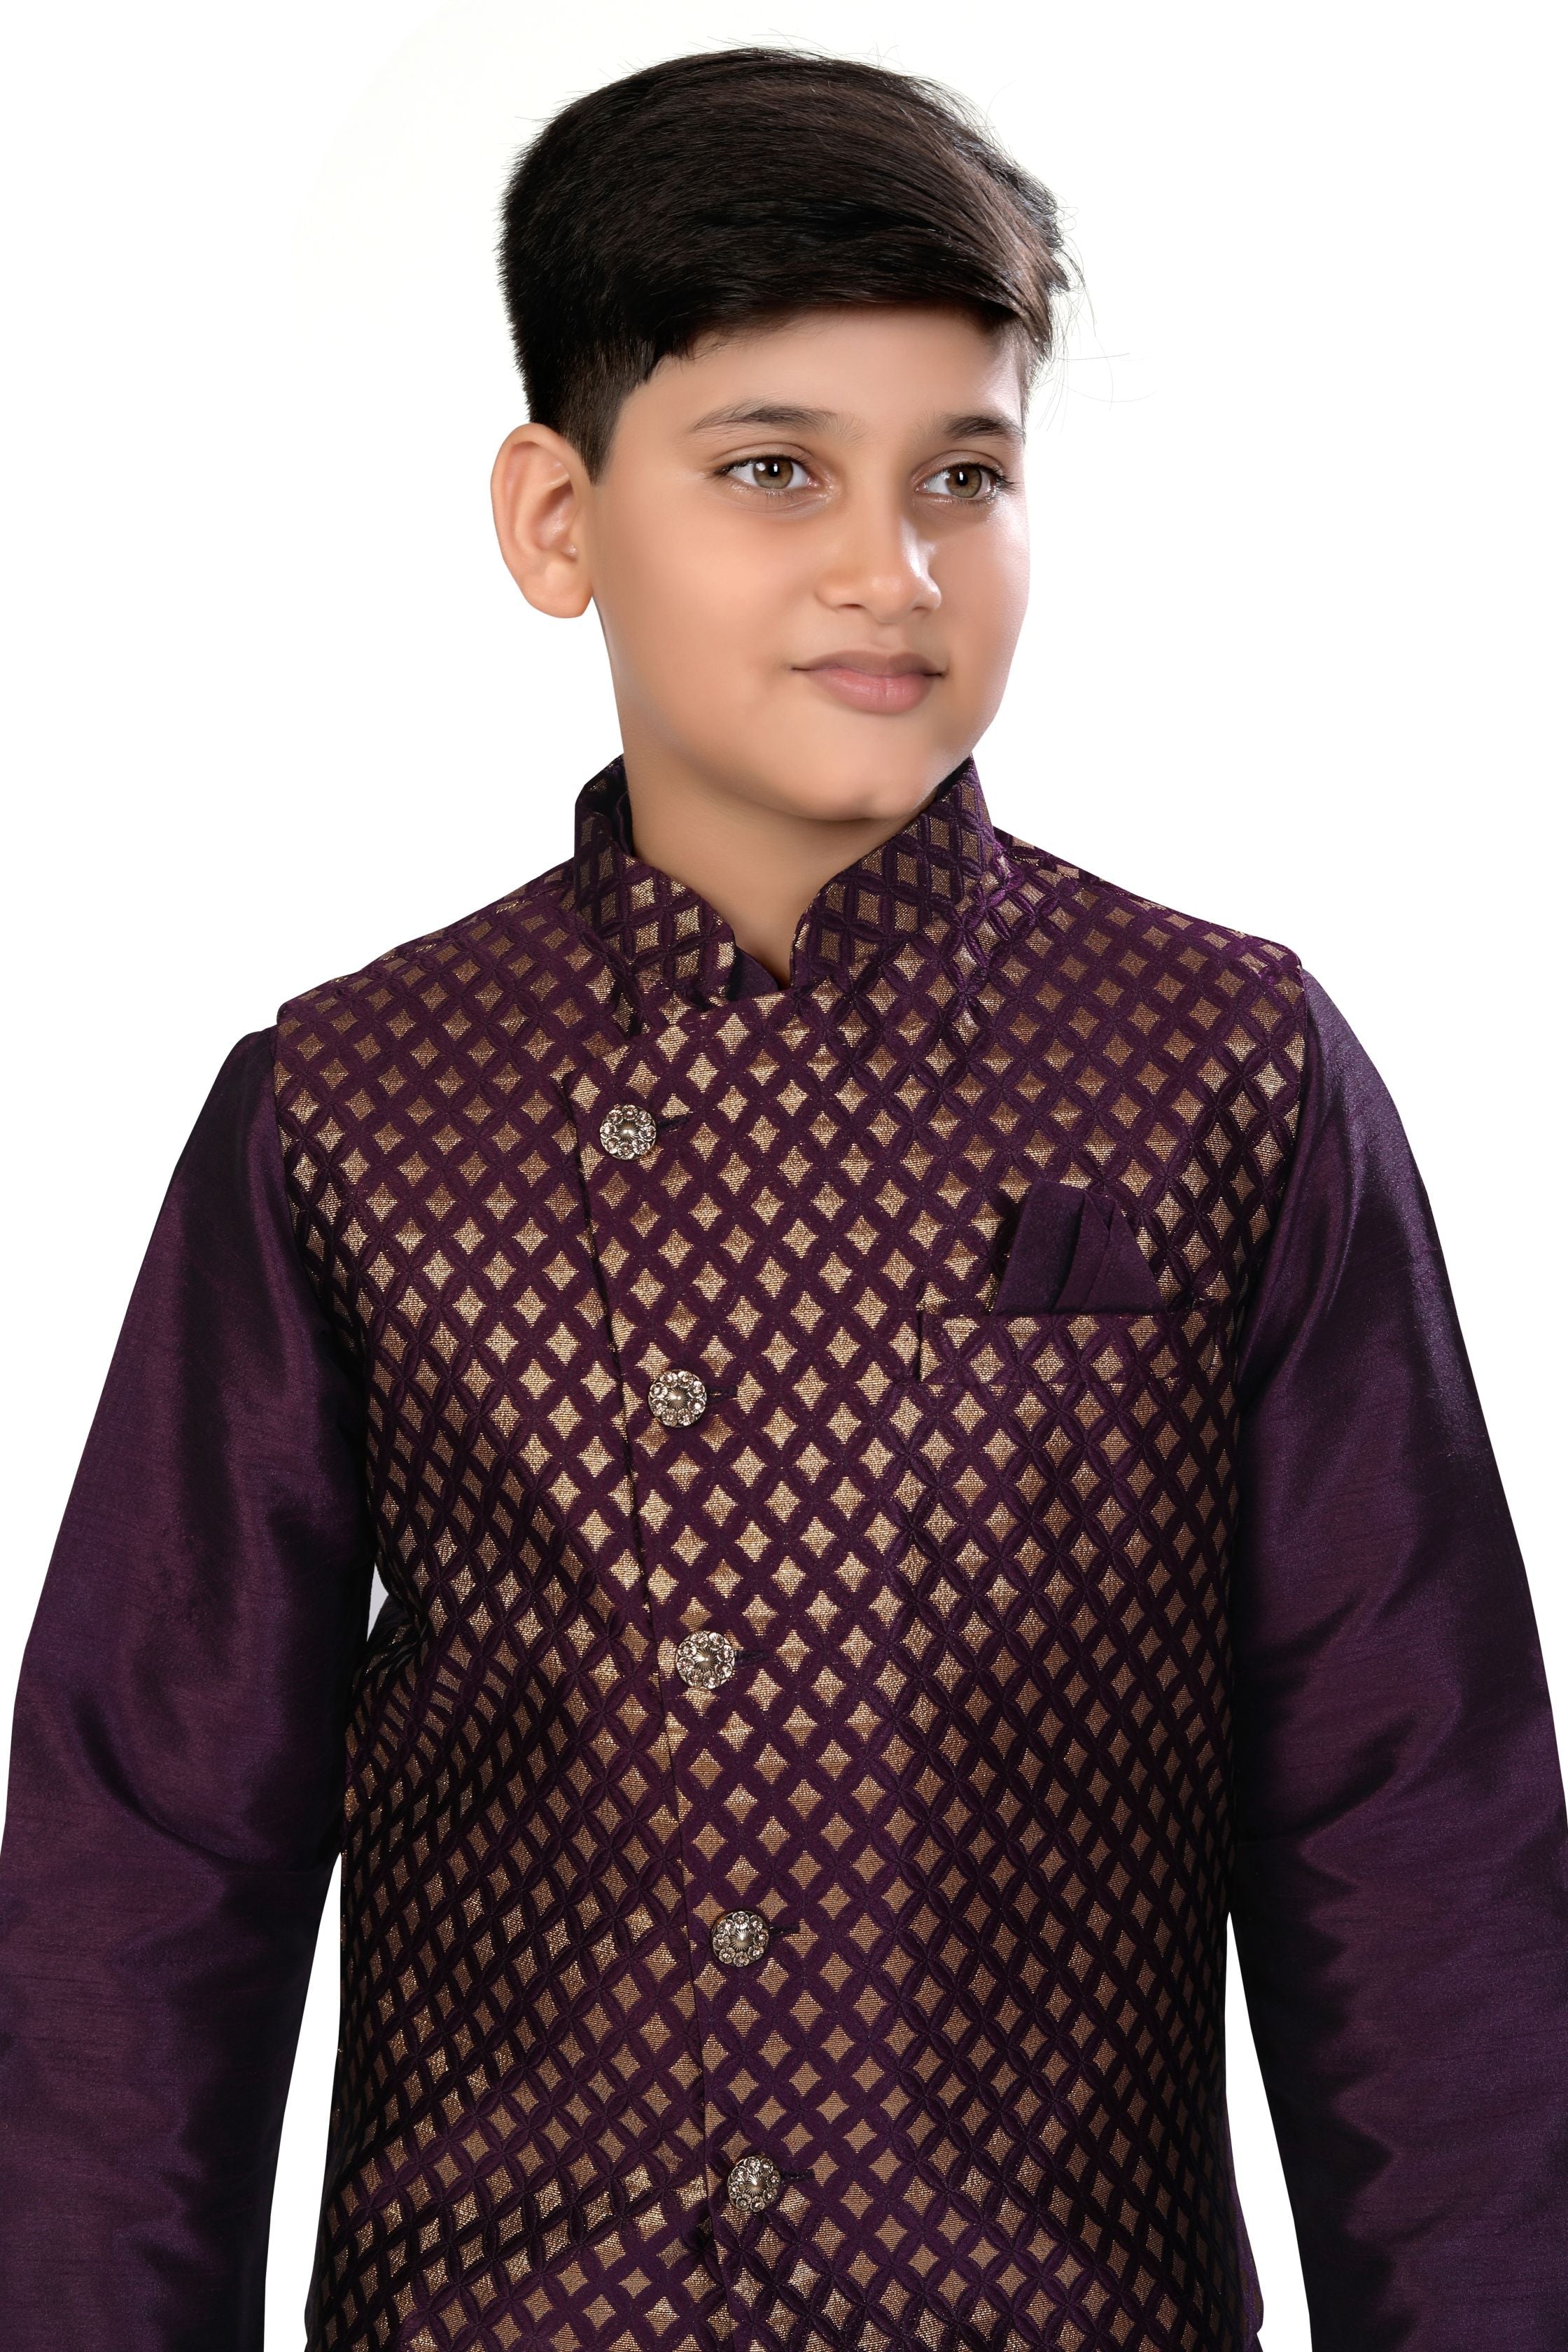 Boys Banarasi Brocade Vest Coat Set in Wine Colour - Premium 3 pieces Vest coat suit from Dapper Ethnic - Just $79! Shop now at Dulhan Exclusives